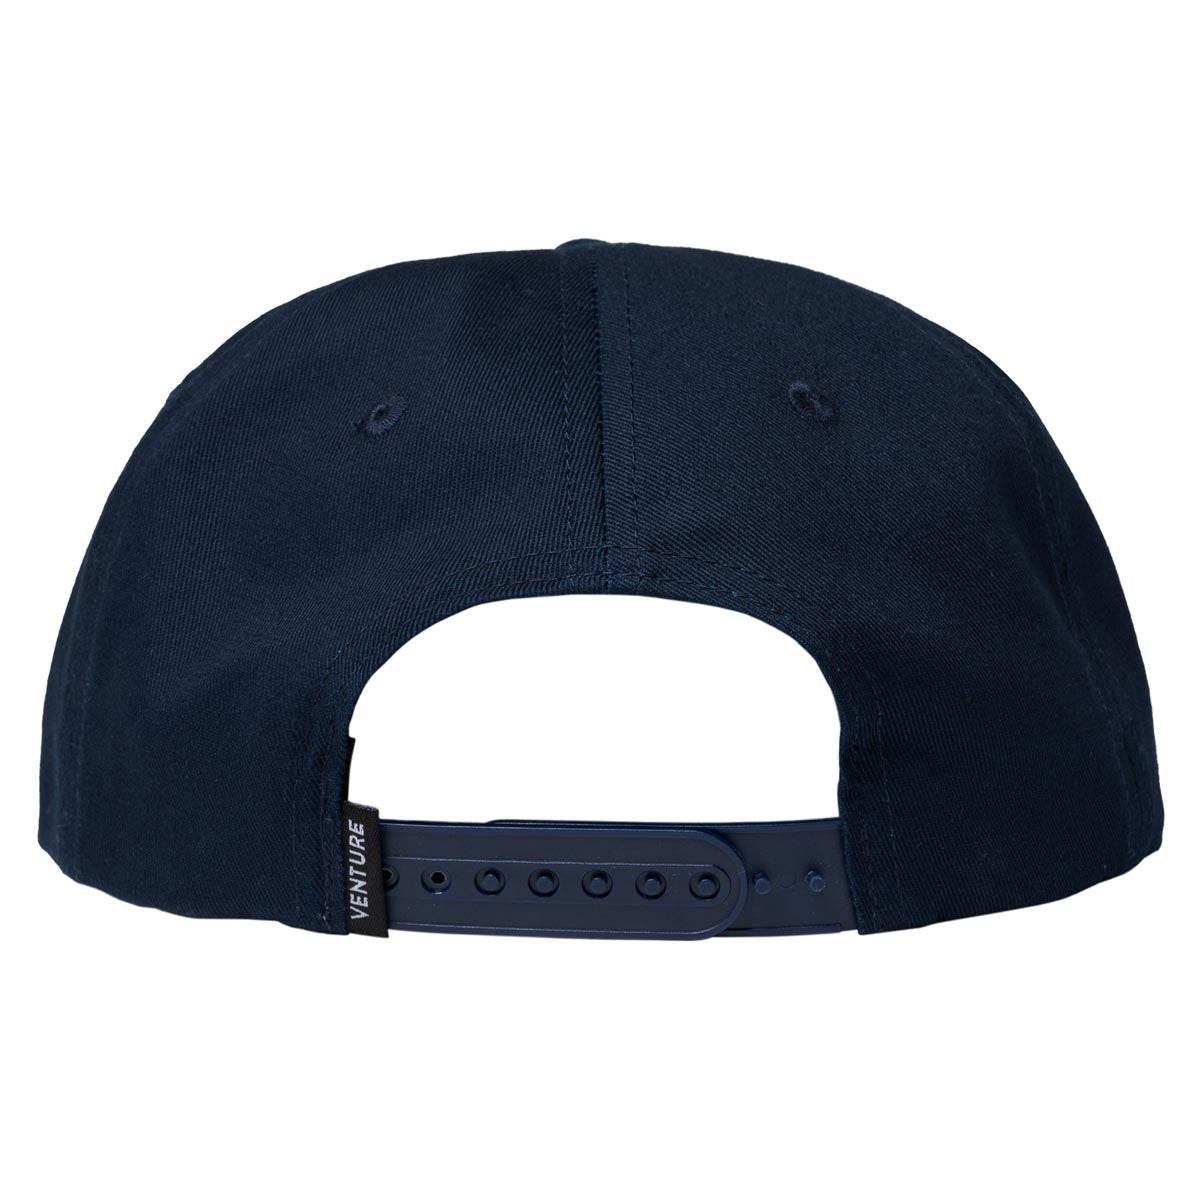 Venture Throw Snapback Hat (Navy/Red) - Apple Valley Emporium